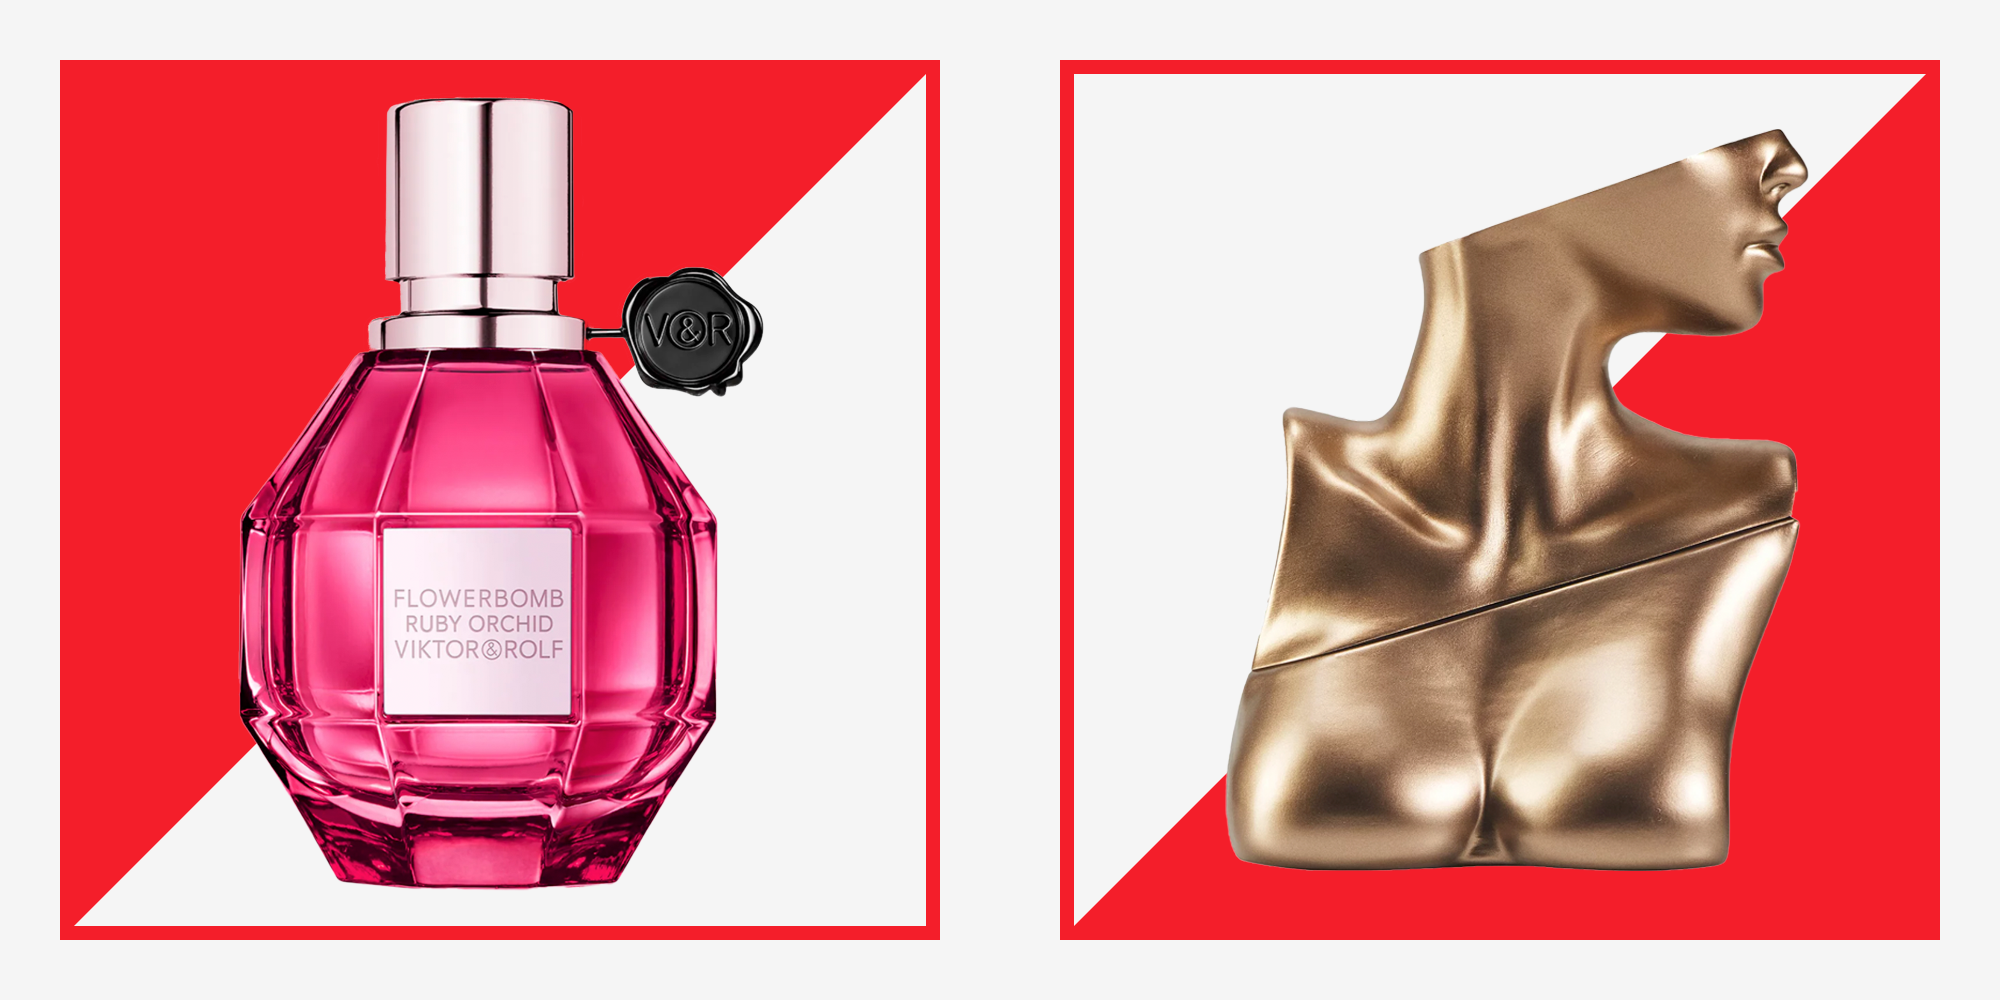  Gucci 4 Piece Mini Perfumes for Women Fragrance Gift Set - 2  ea Bloom EDP 0.16 oz splash and Flora Gorgeous Gardenia EDP 0.16 oz splash  : Beauty & Personal Care